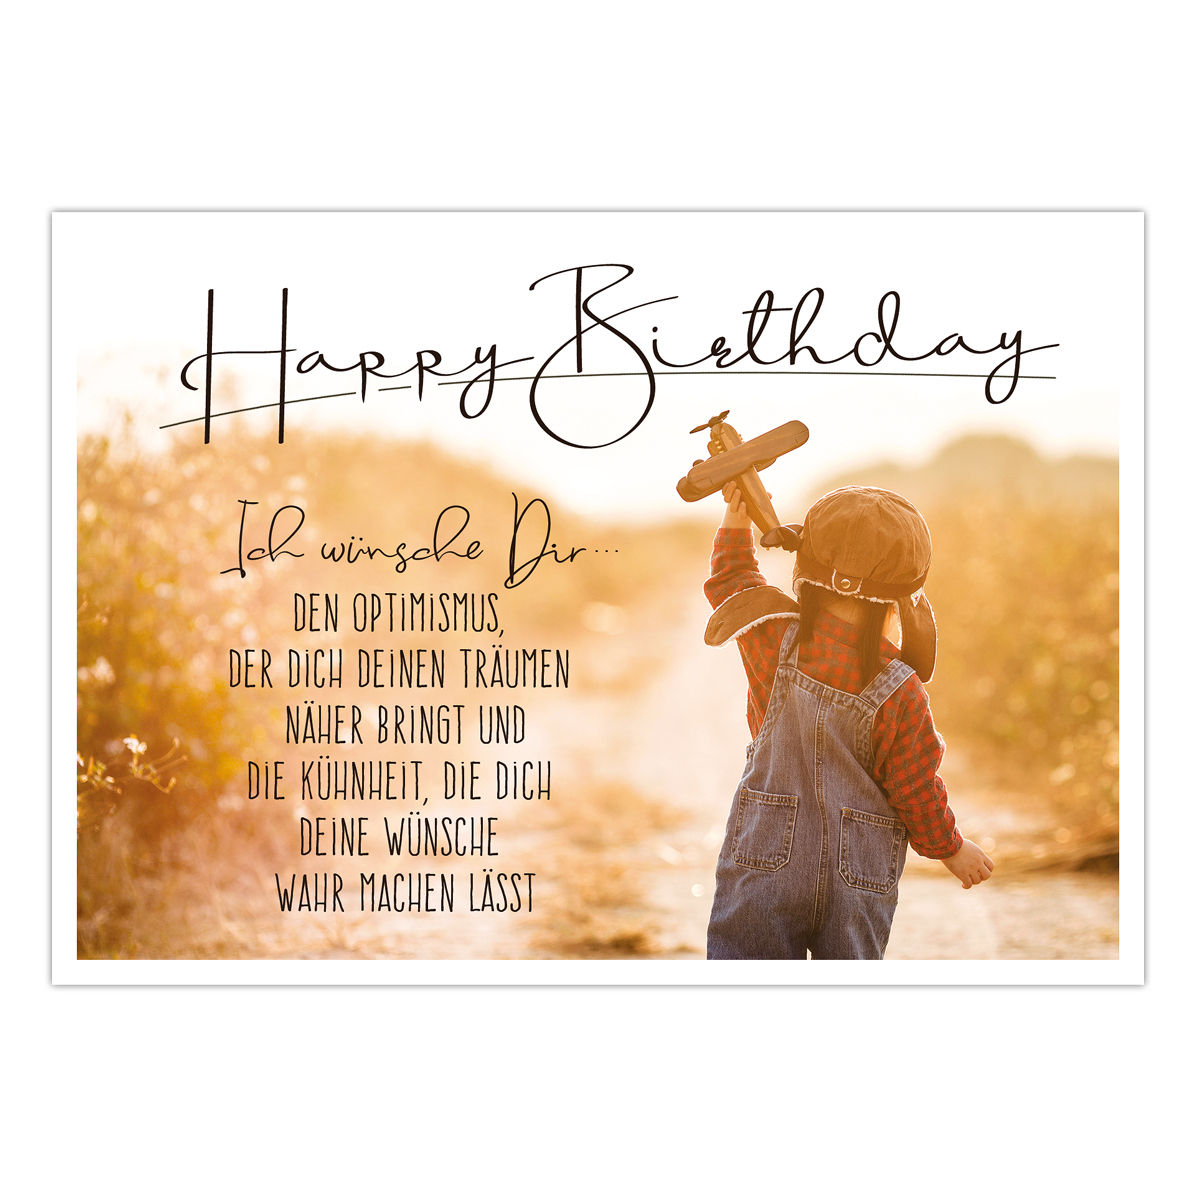 Geburtstagskarte &quot; ♥ Ich Wünsche Dir ♥ Happy Birthday&quot; Klappkarte über Ich Wünsche Dir Sprüche